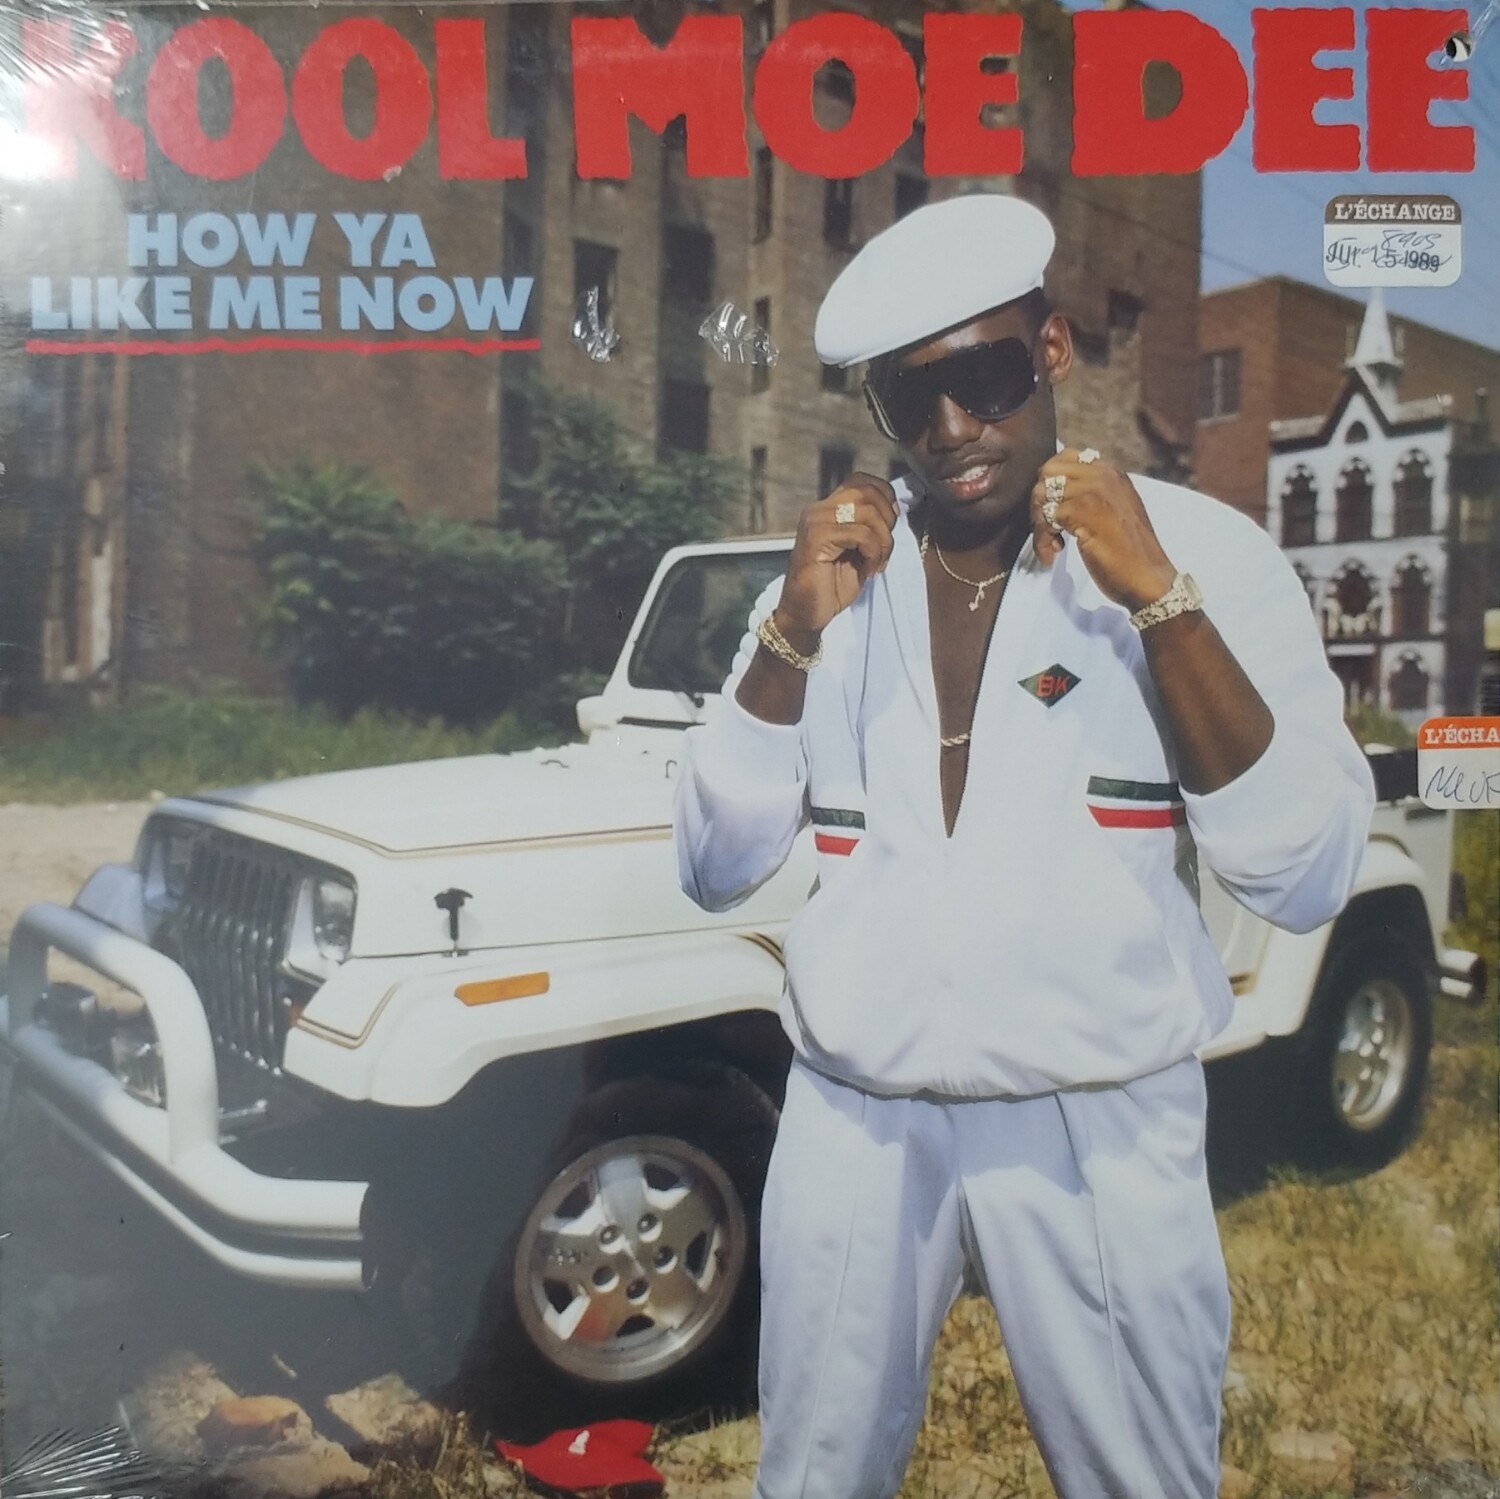 Kool Moe Dee - How ya like me now